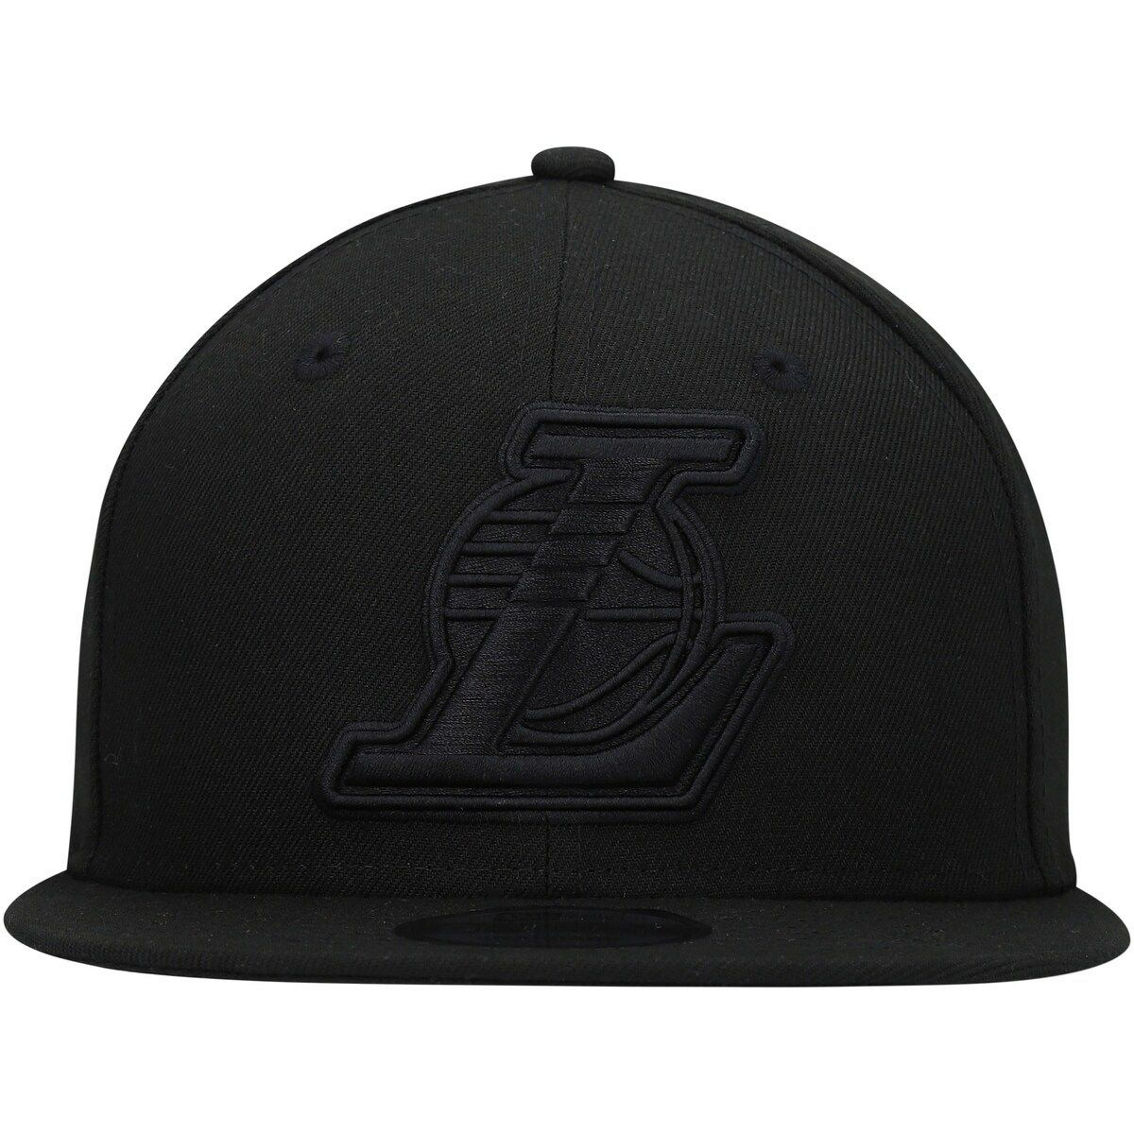 New Era Men's Los Angeles Lakers Black On Black 9FIFTY Snapback Hat - Image 3 of 4